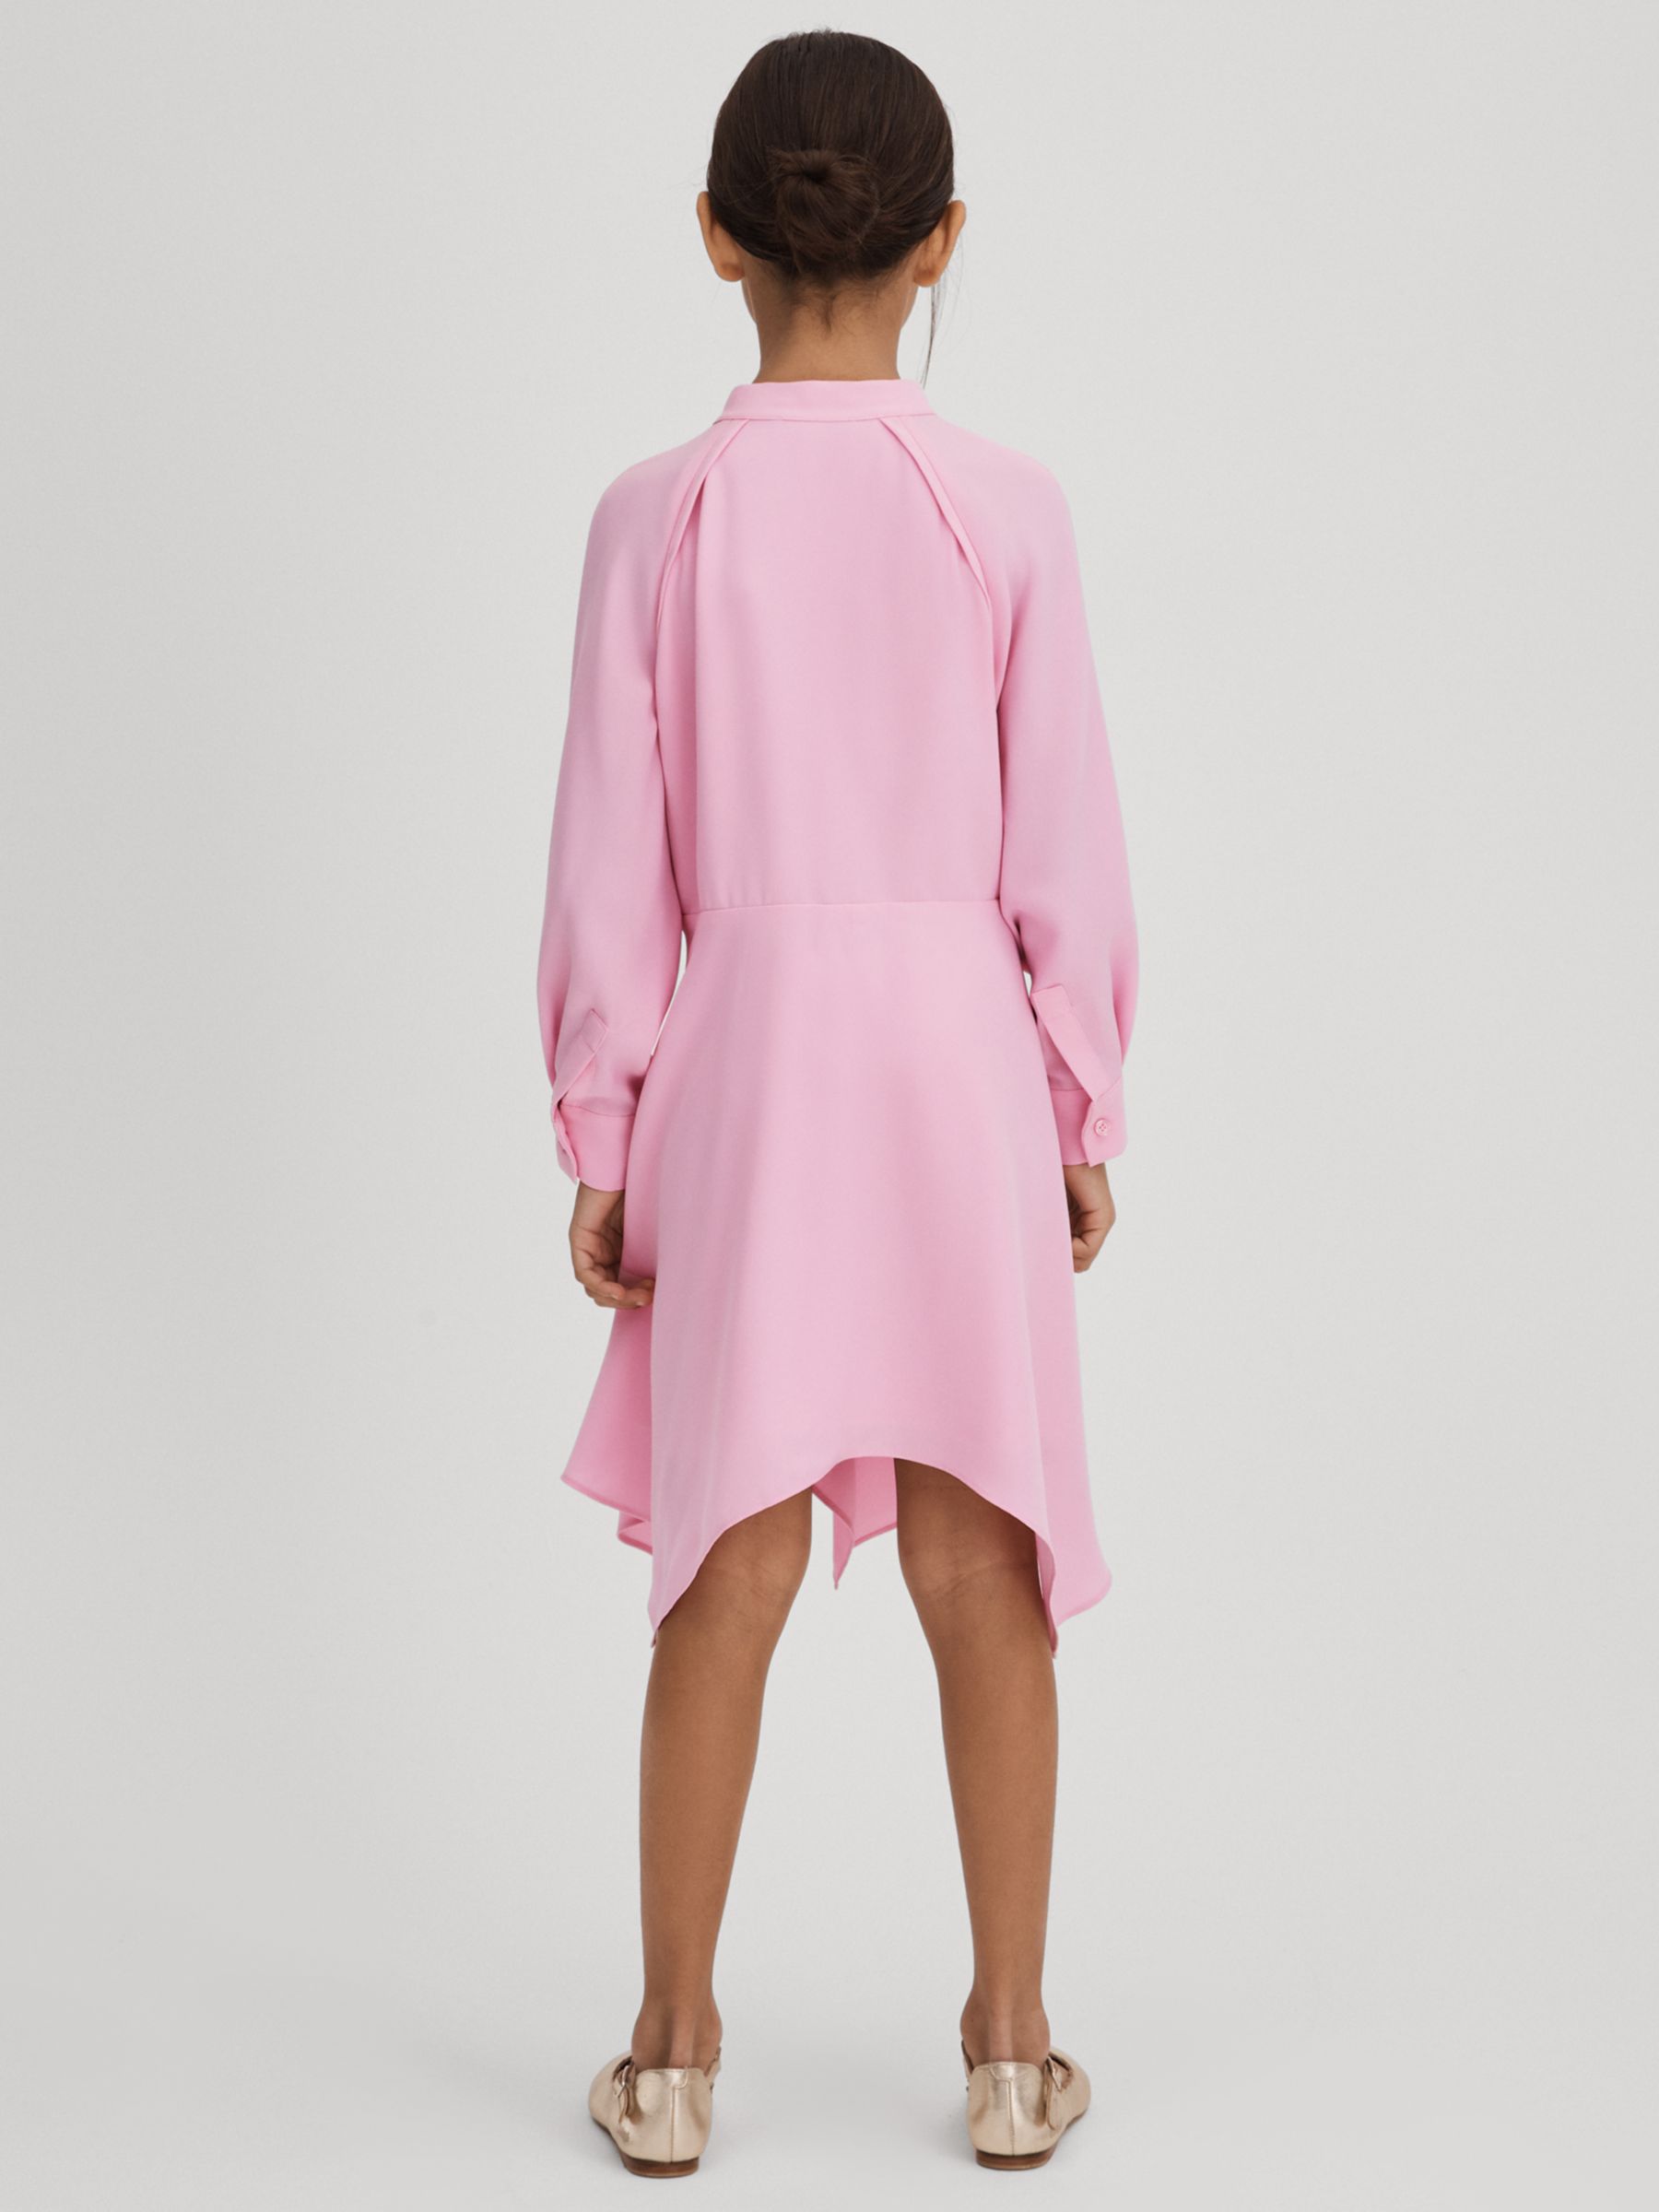 Reiss Kids' Erica Zip Front Asymmetric Dress, Pink, 11-12Y